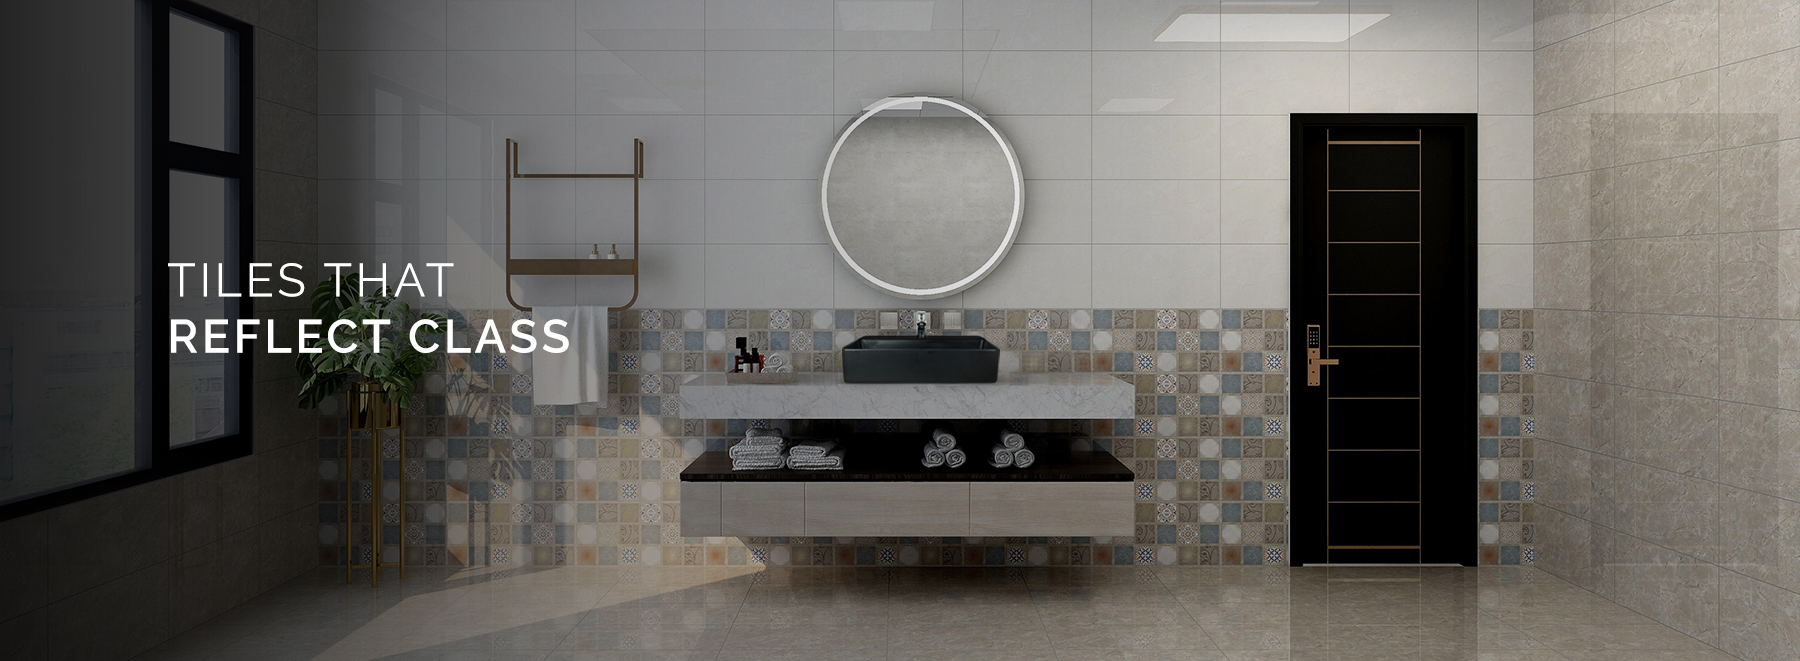 somany bathroom wall tiles